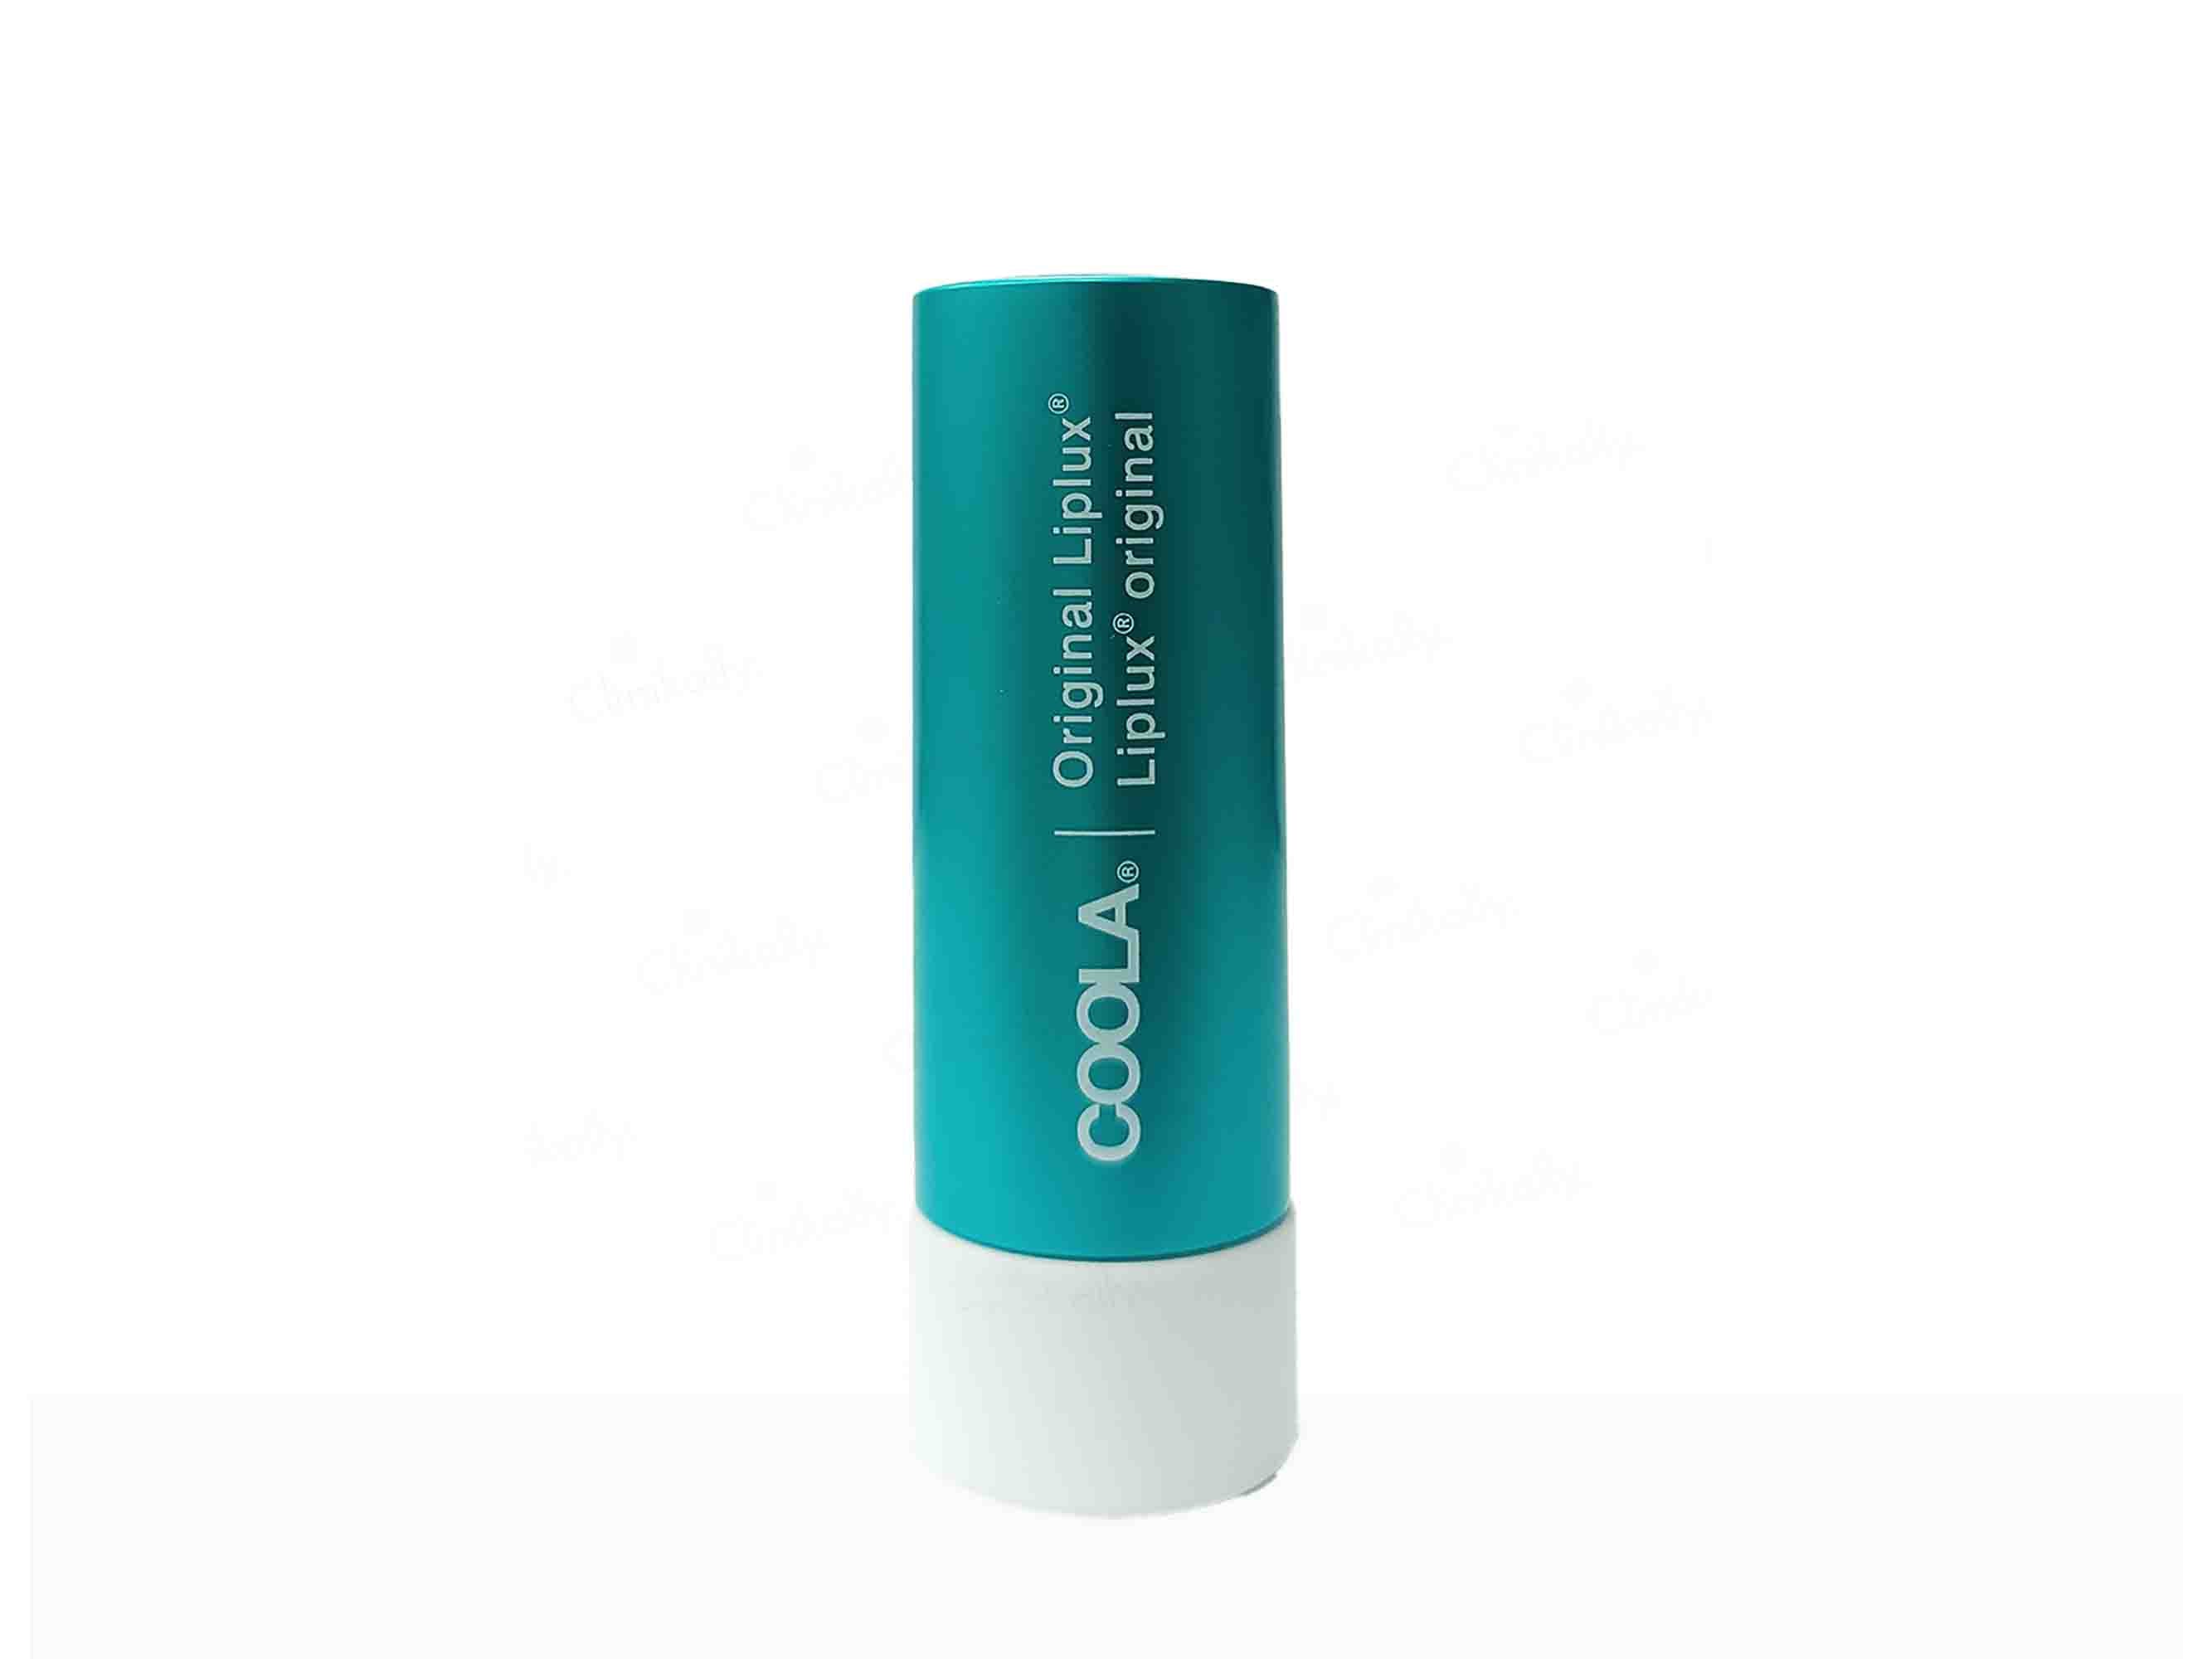 Coola Liplux Sunscreen - Clinikally